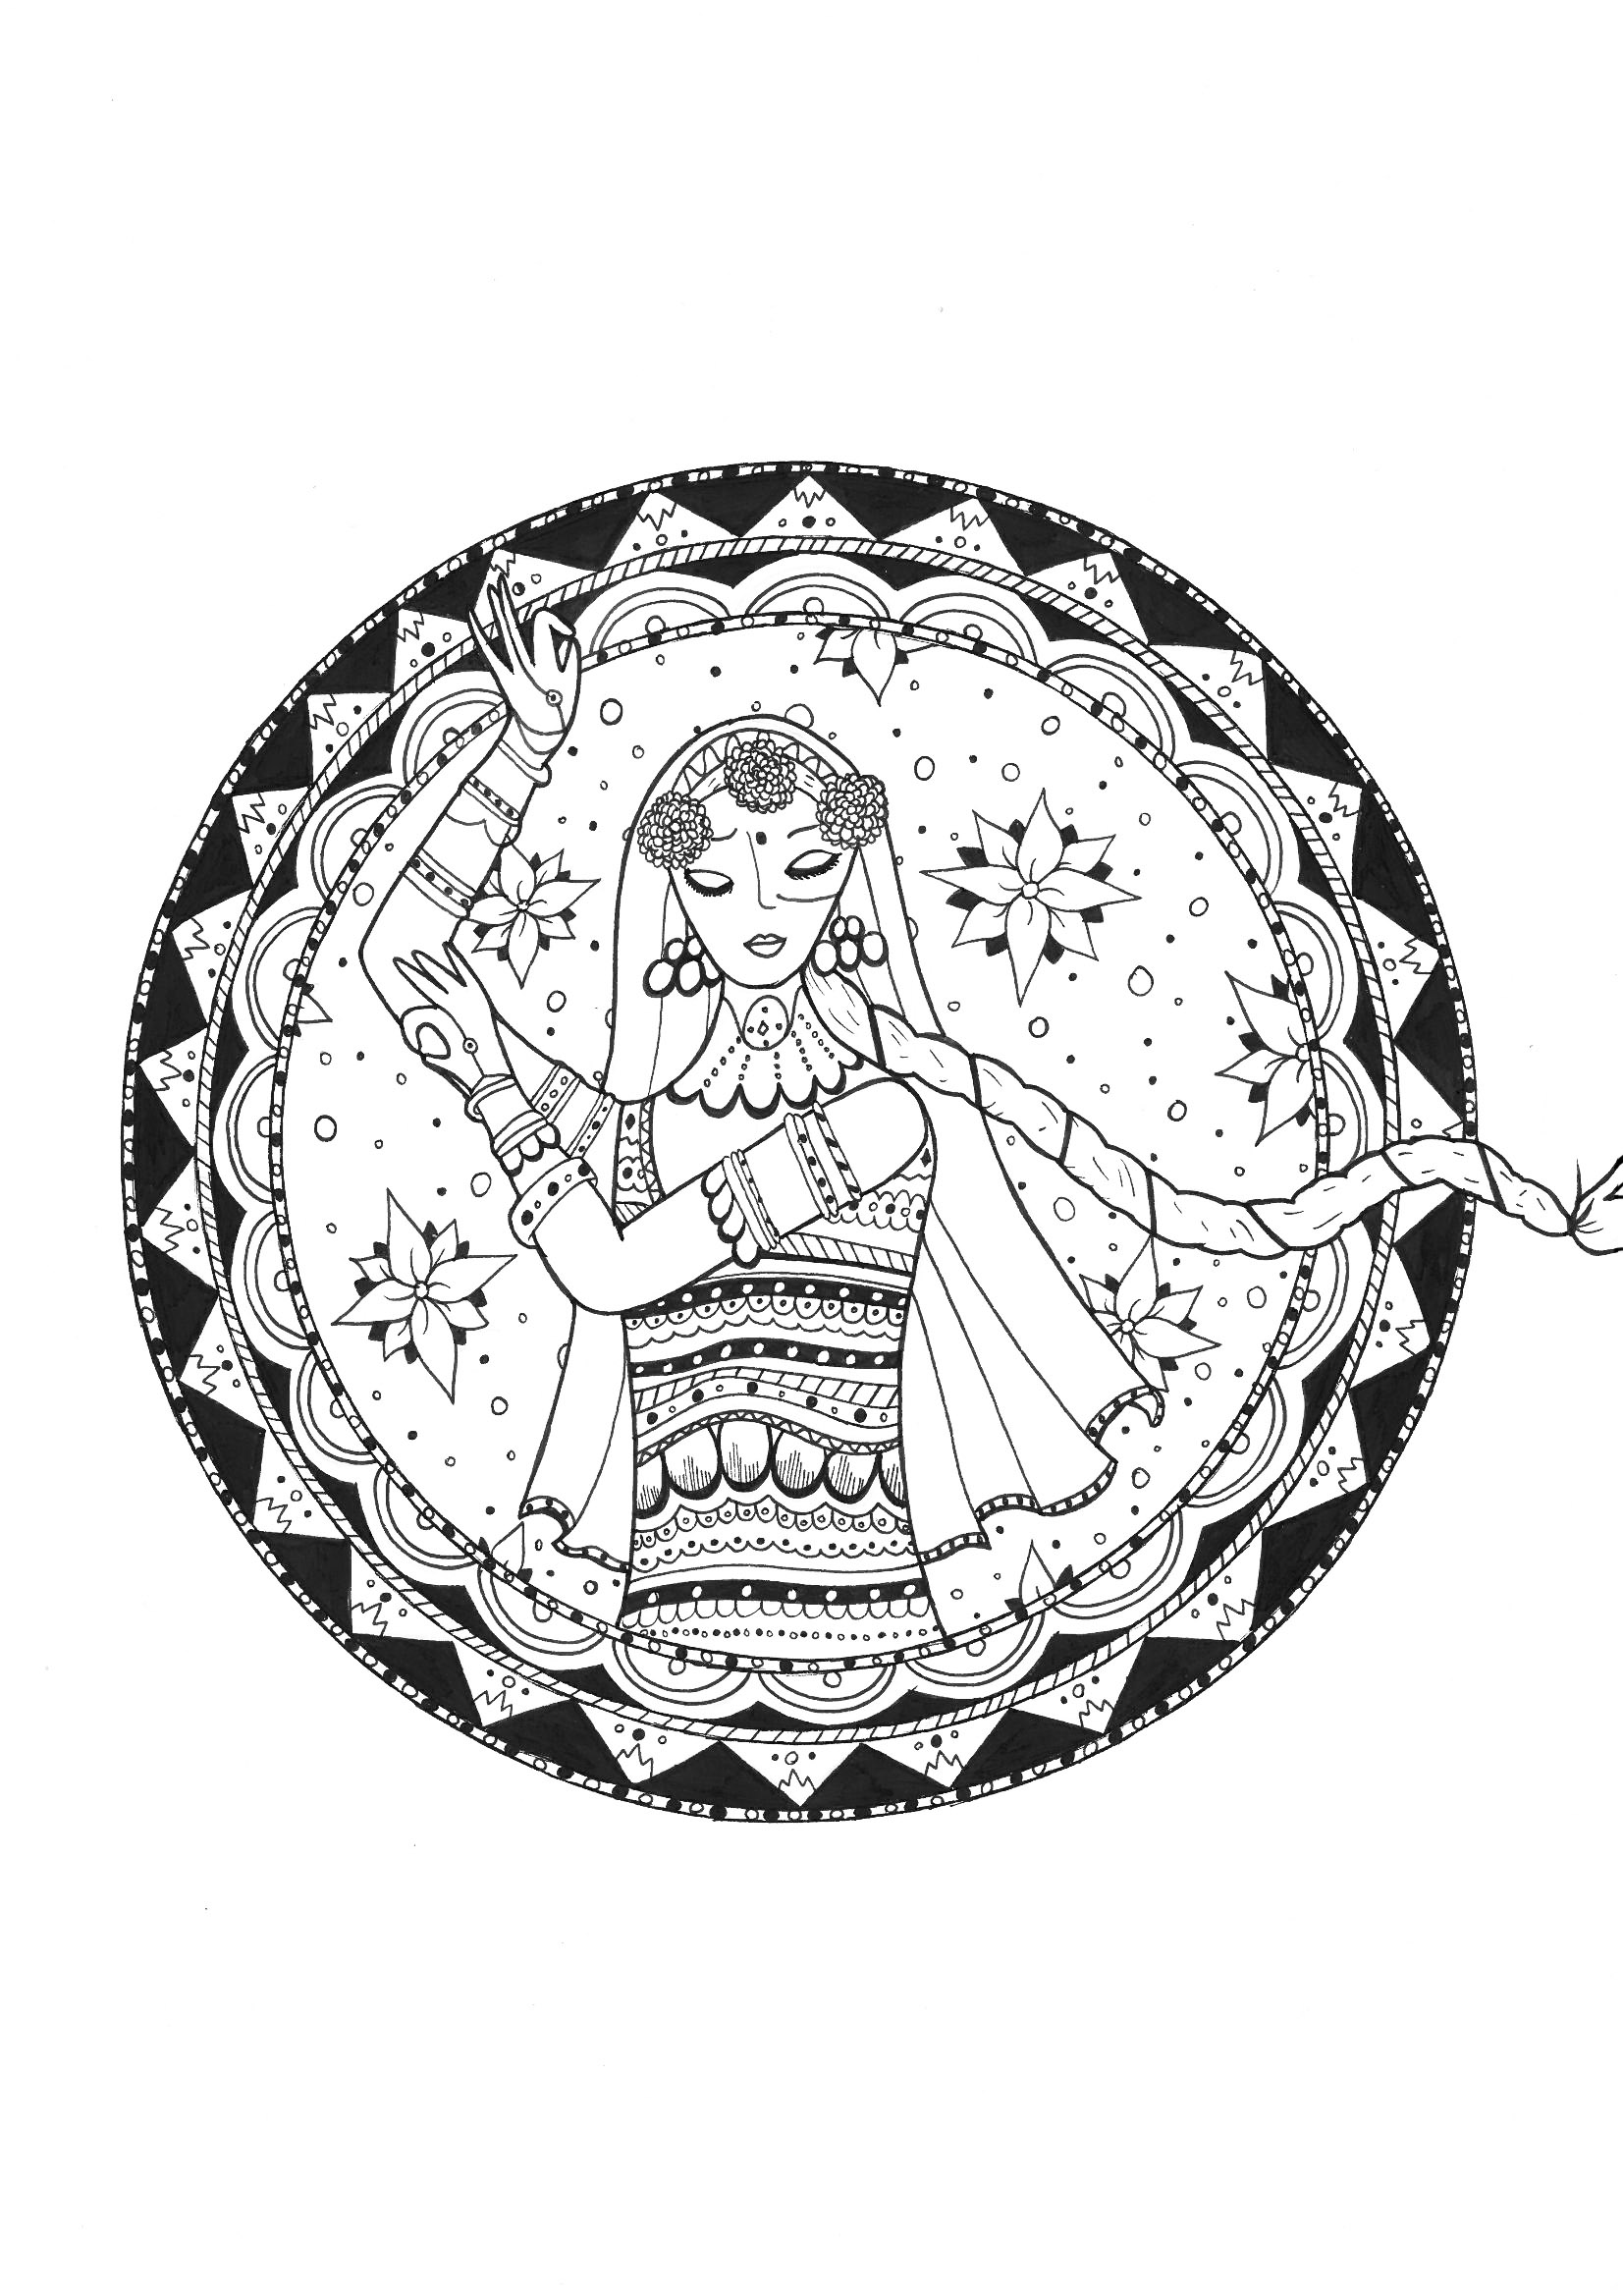 A dancing-girl of Bollywood in a Mandala